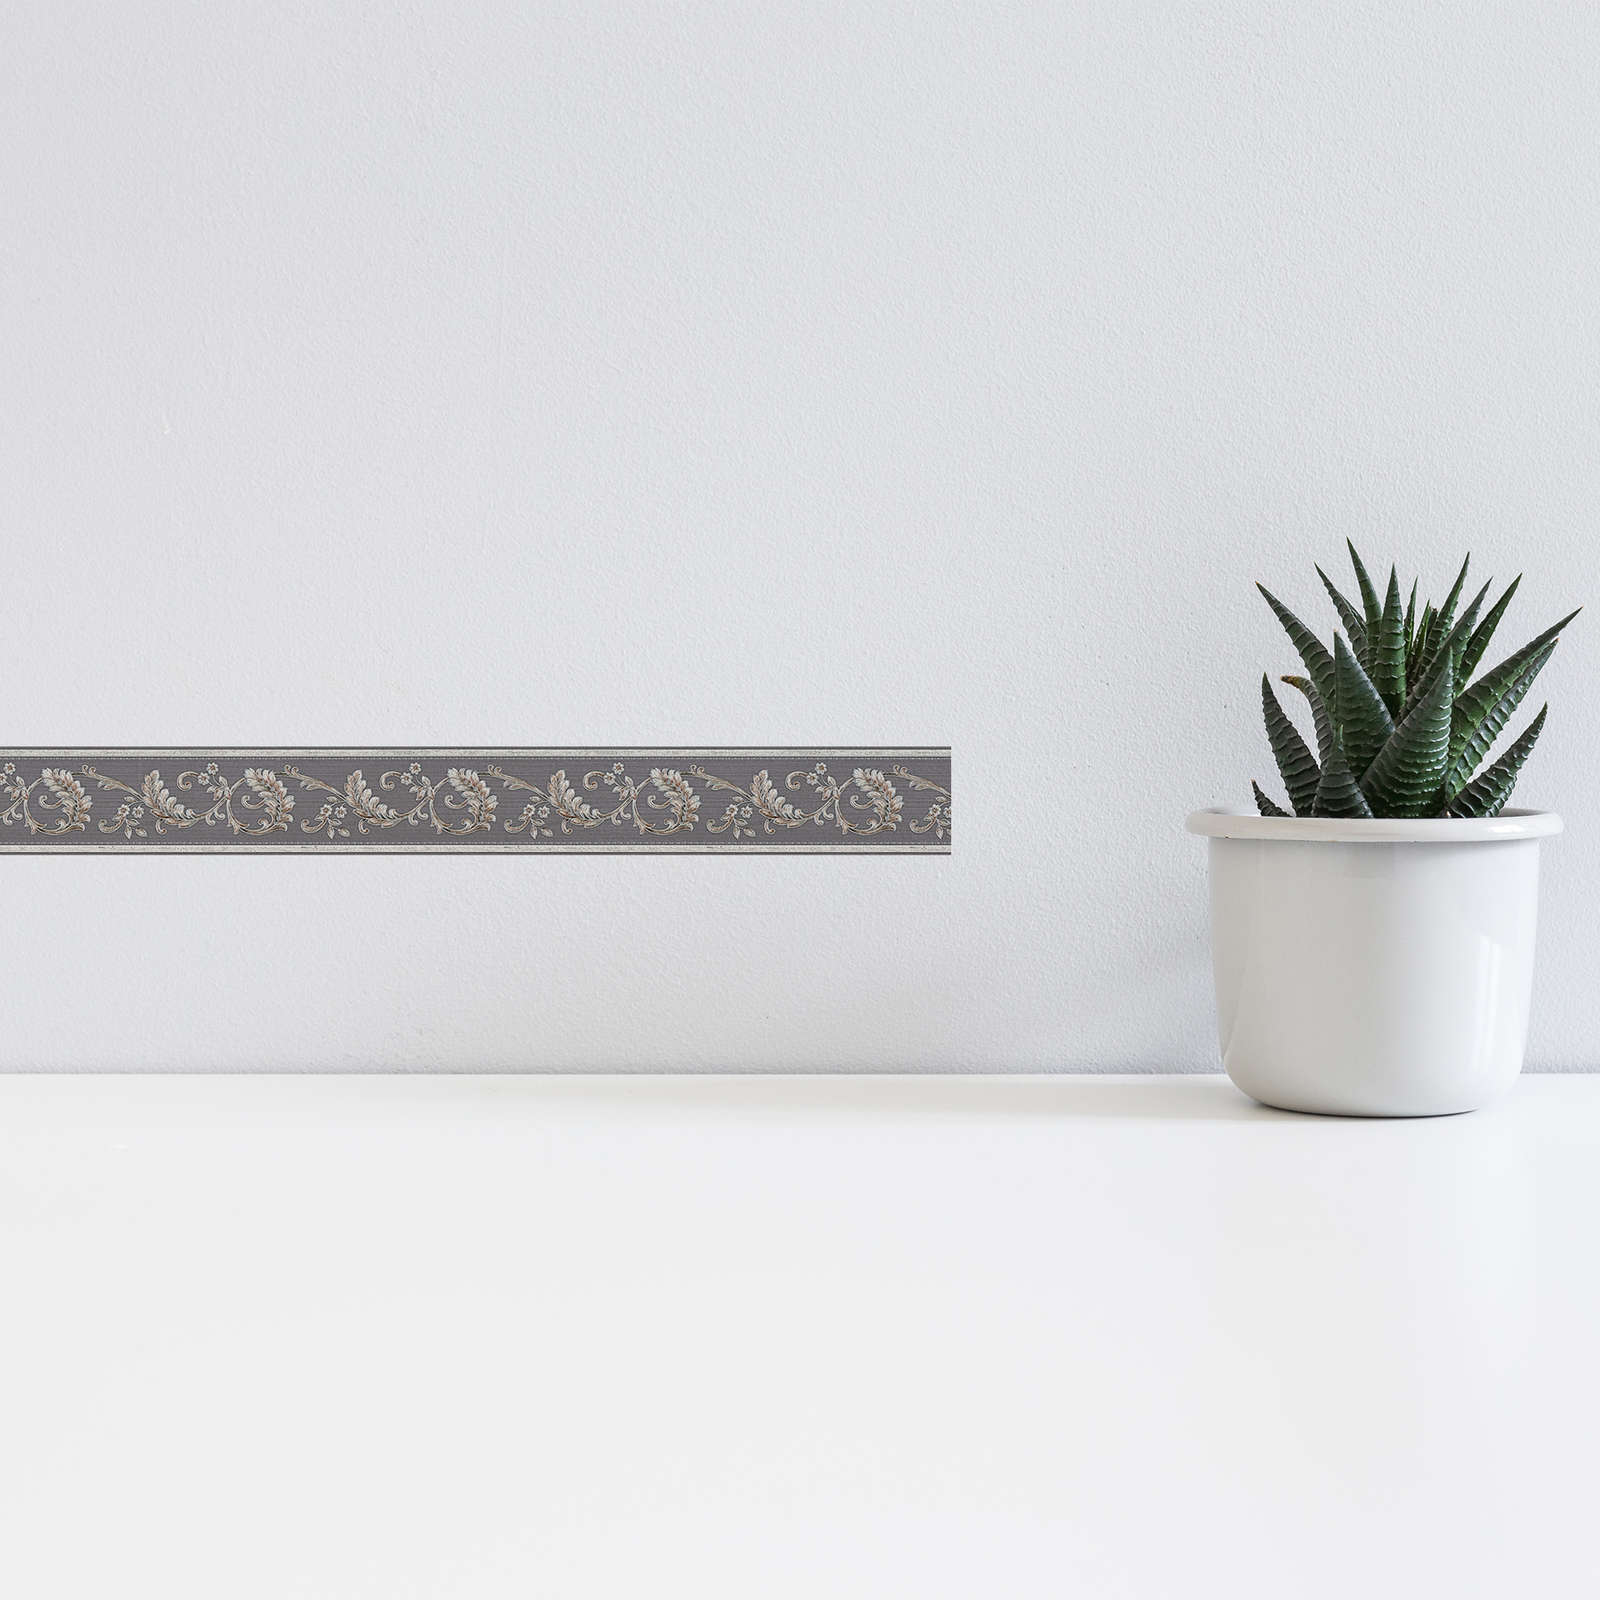             Wallpaper border with metallic effect & ornament design - grey
        